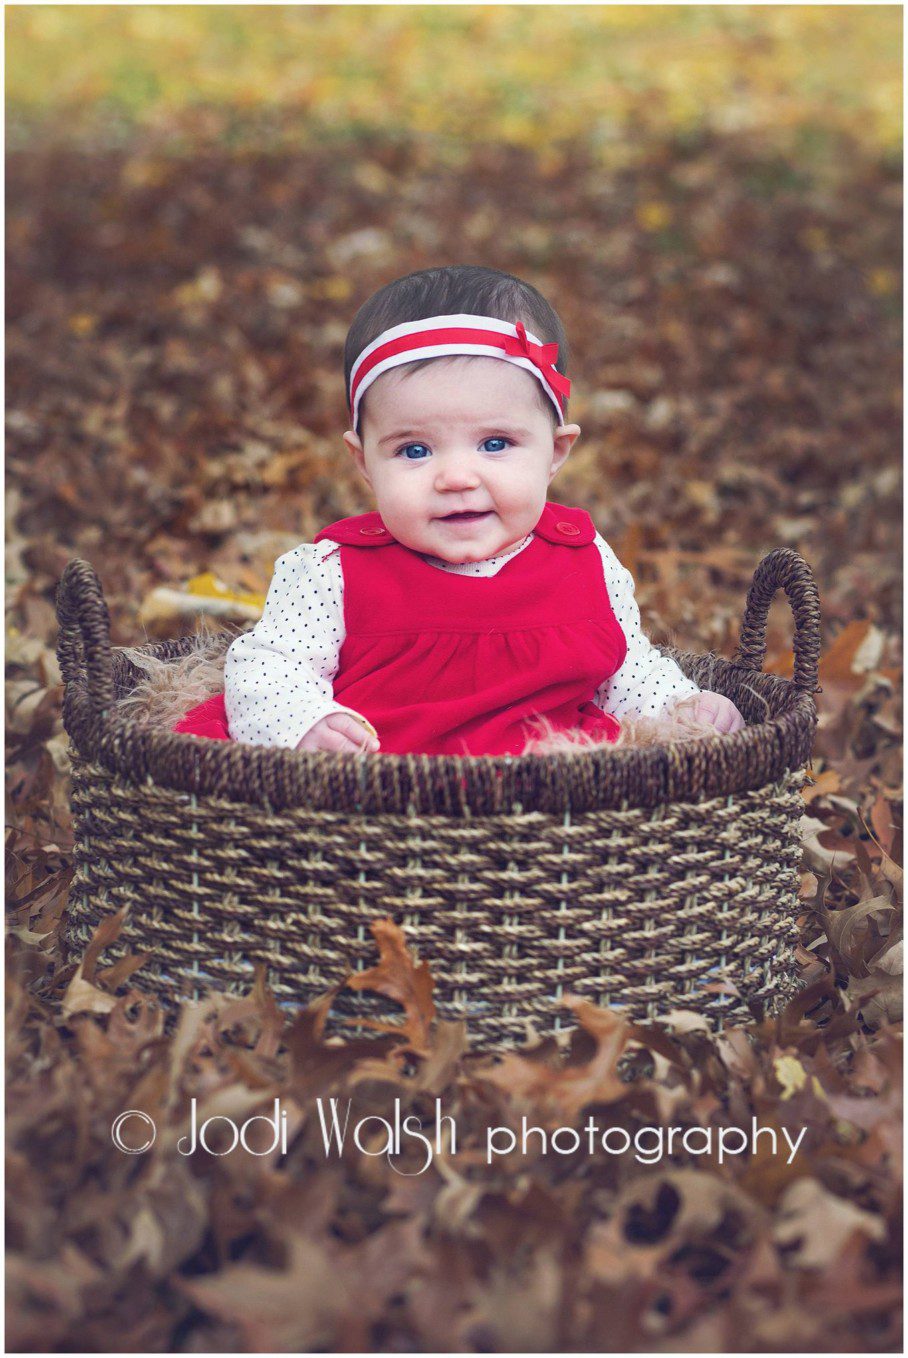 baby girl, red dress, basket, fall leaves